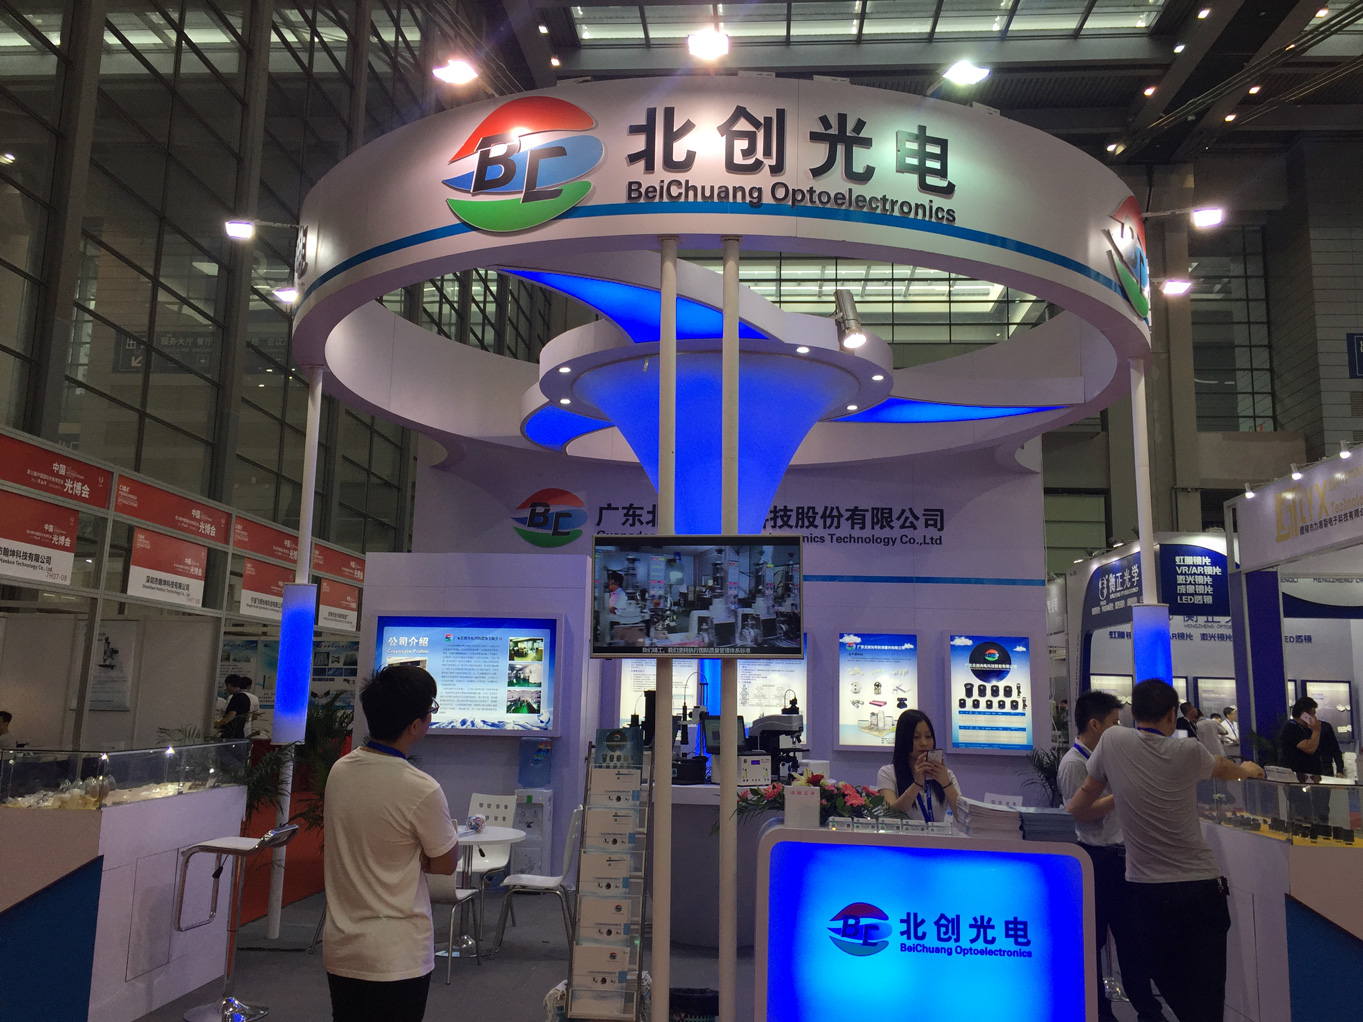 The nineteenth China International Optoelectronic Exposition